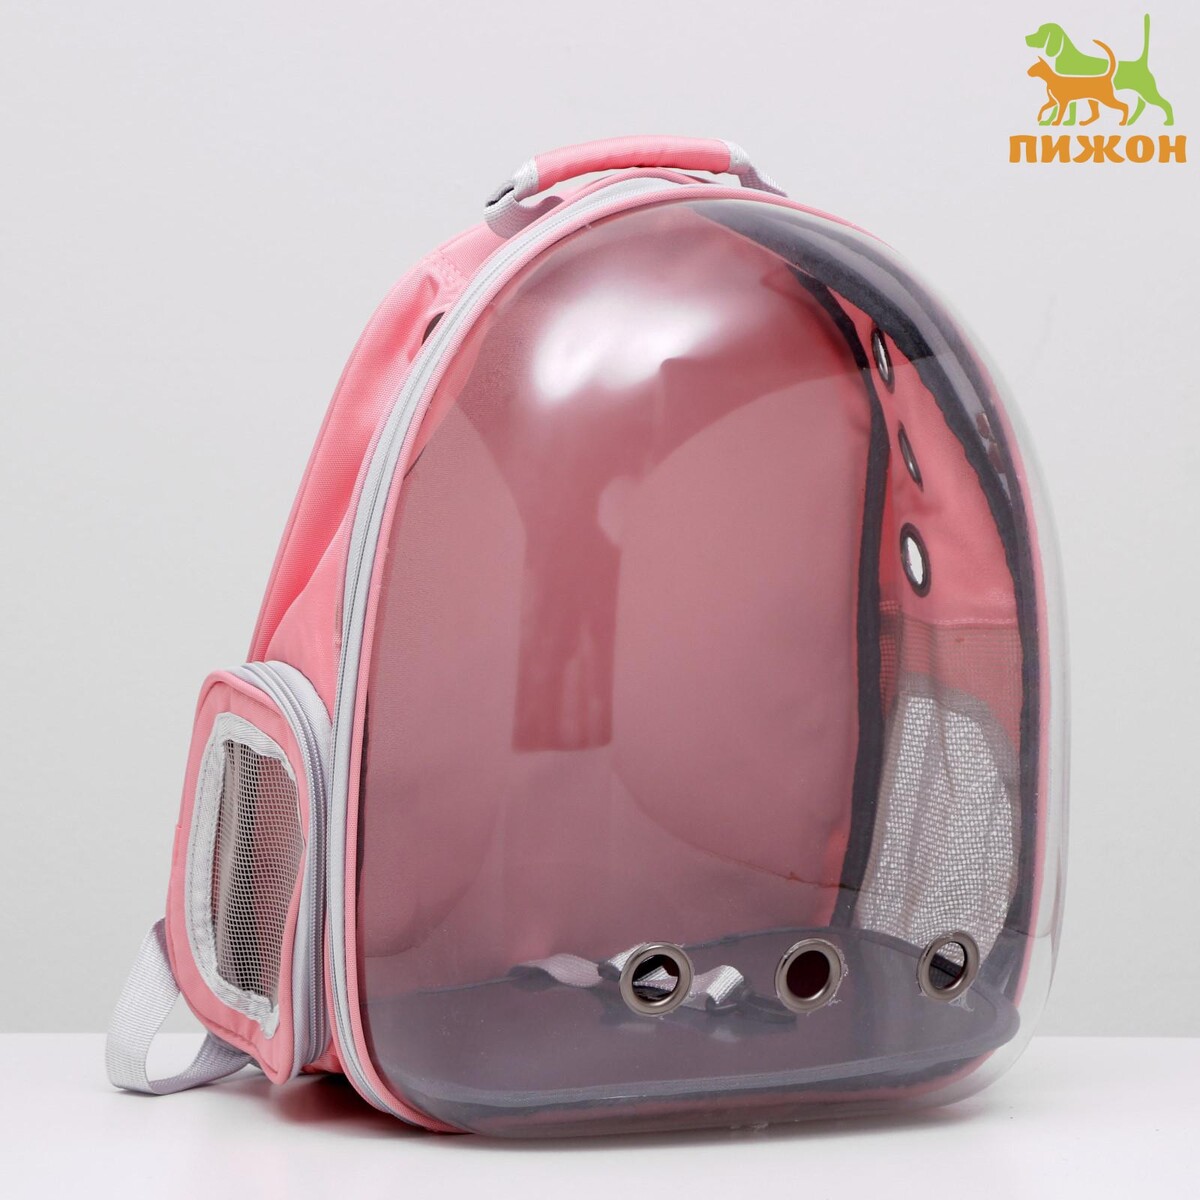 Рюкзак для переноски животных, прозрачный, 31 х 28 х 42 см, розовый рюкзак для переноски животных прозрачный 31 х 28 х 42 см желтый